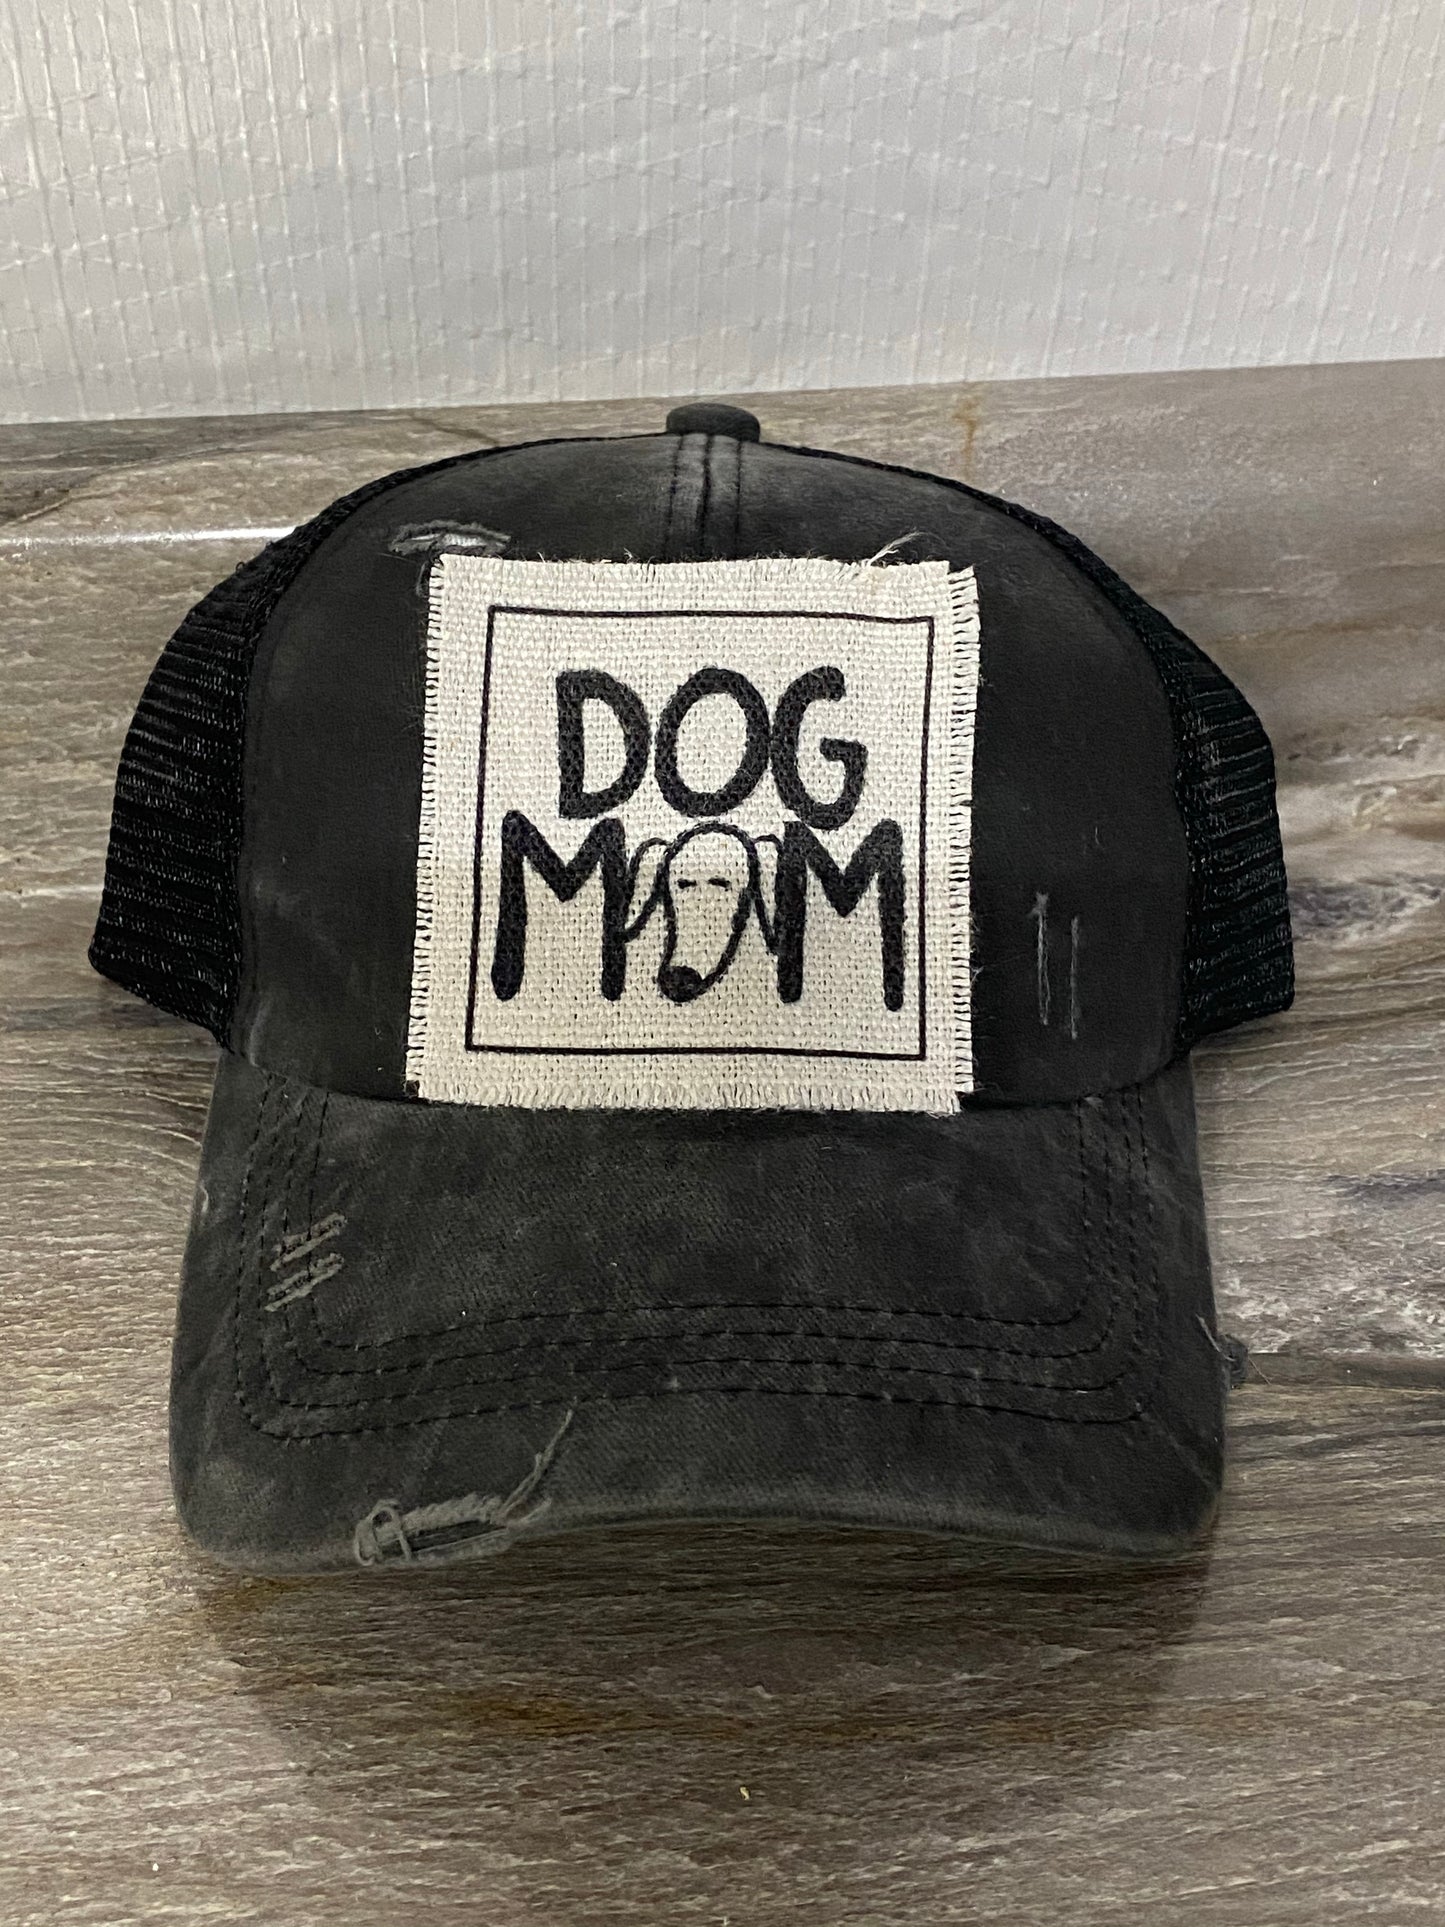 Dog Mom Emoji Hat Patch